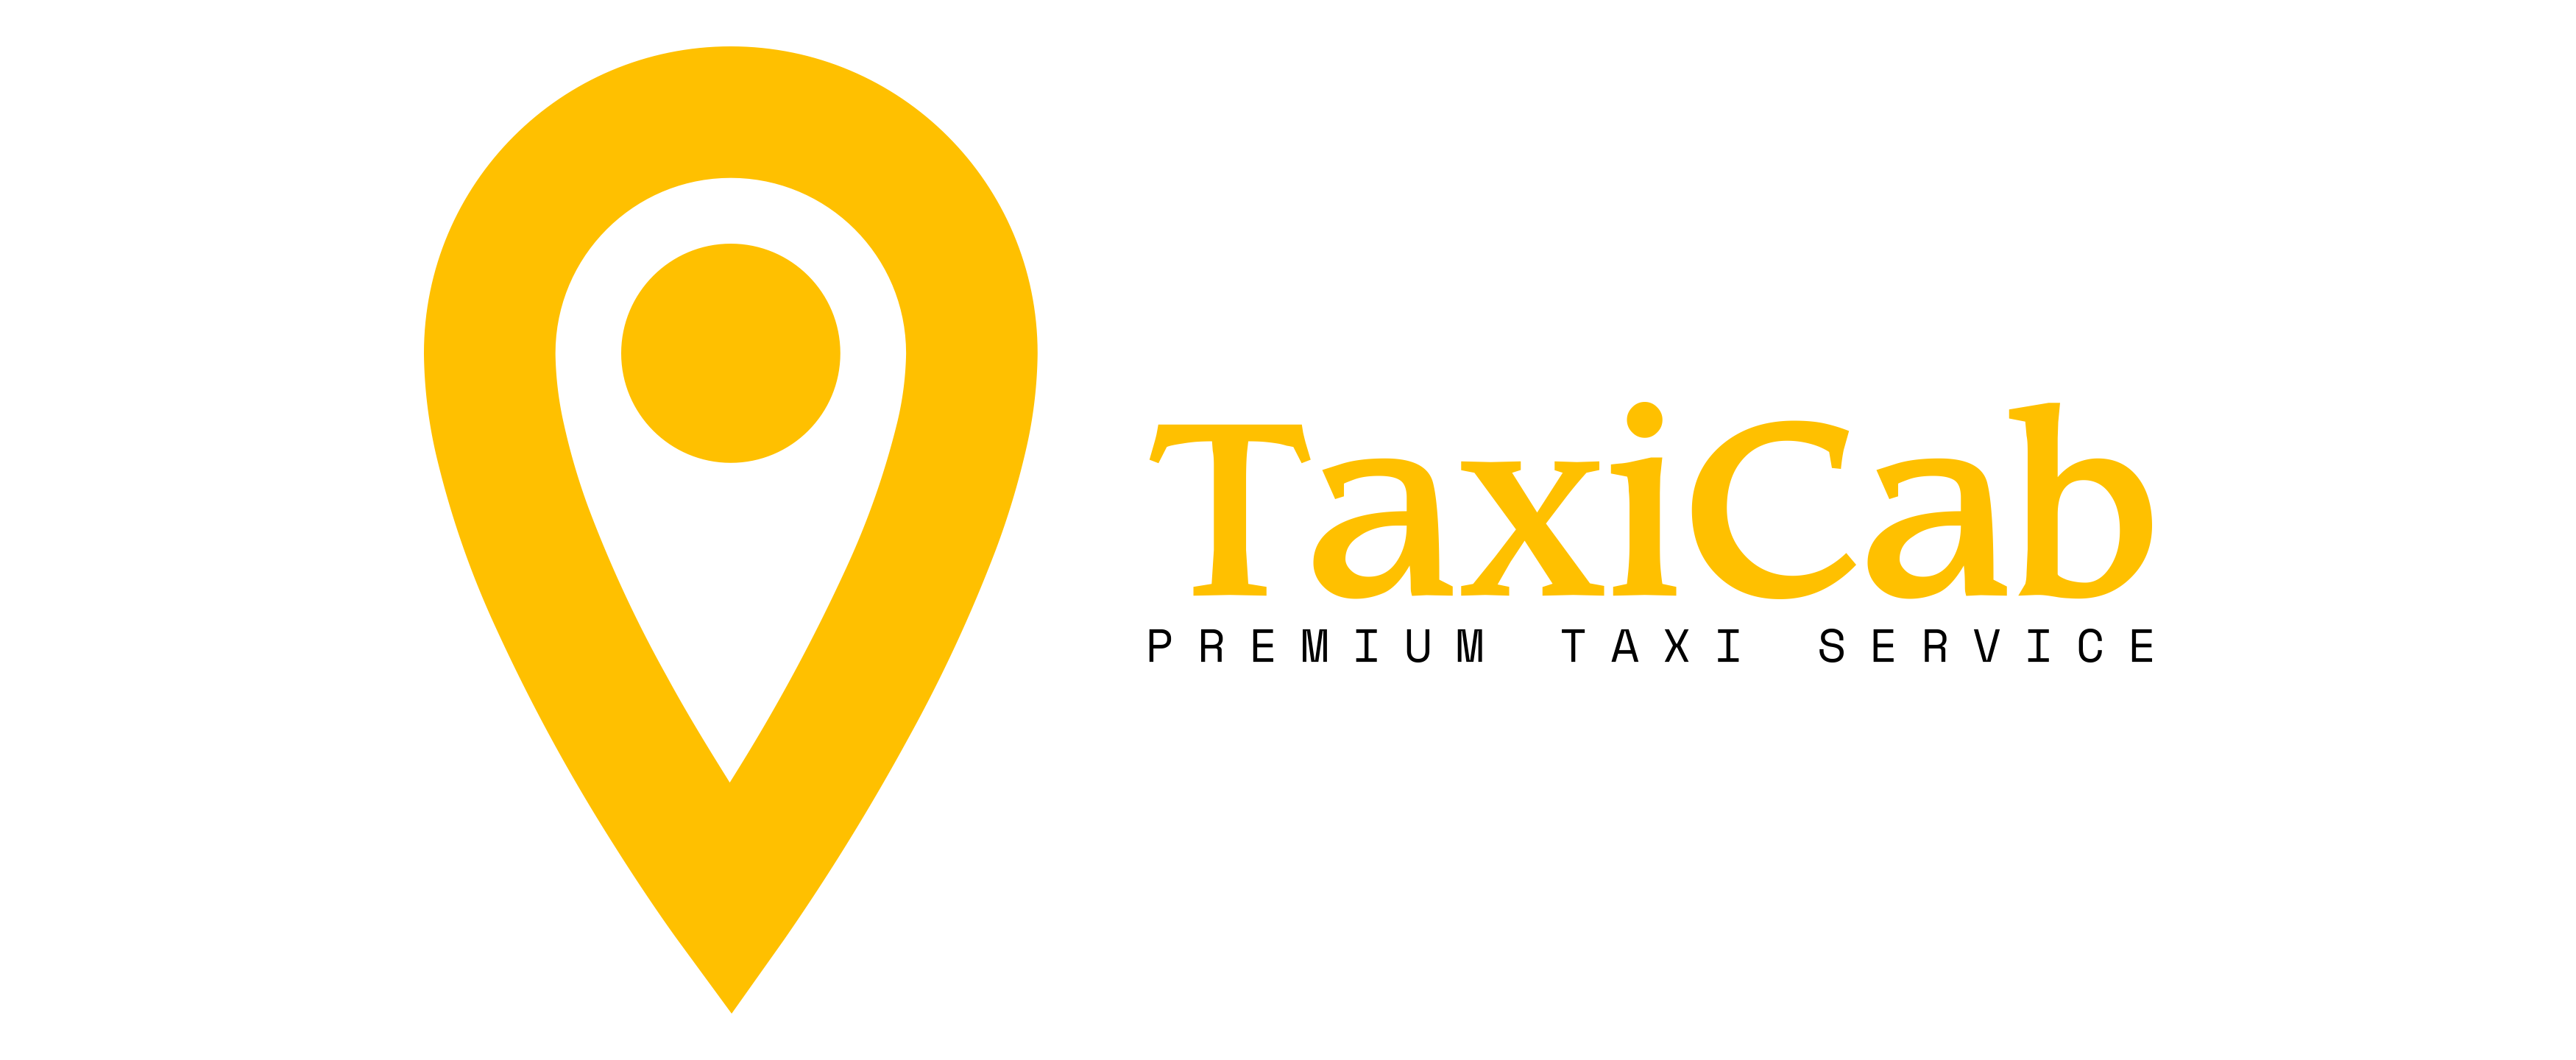 Tulsa Taxi Cab